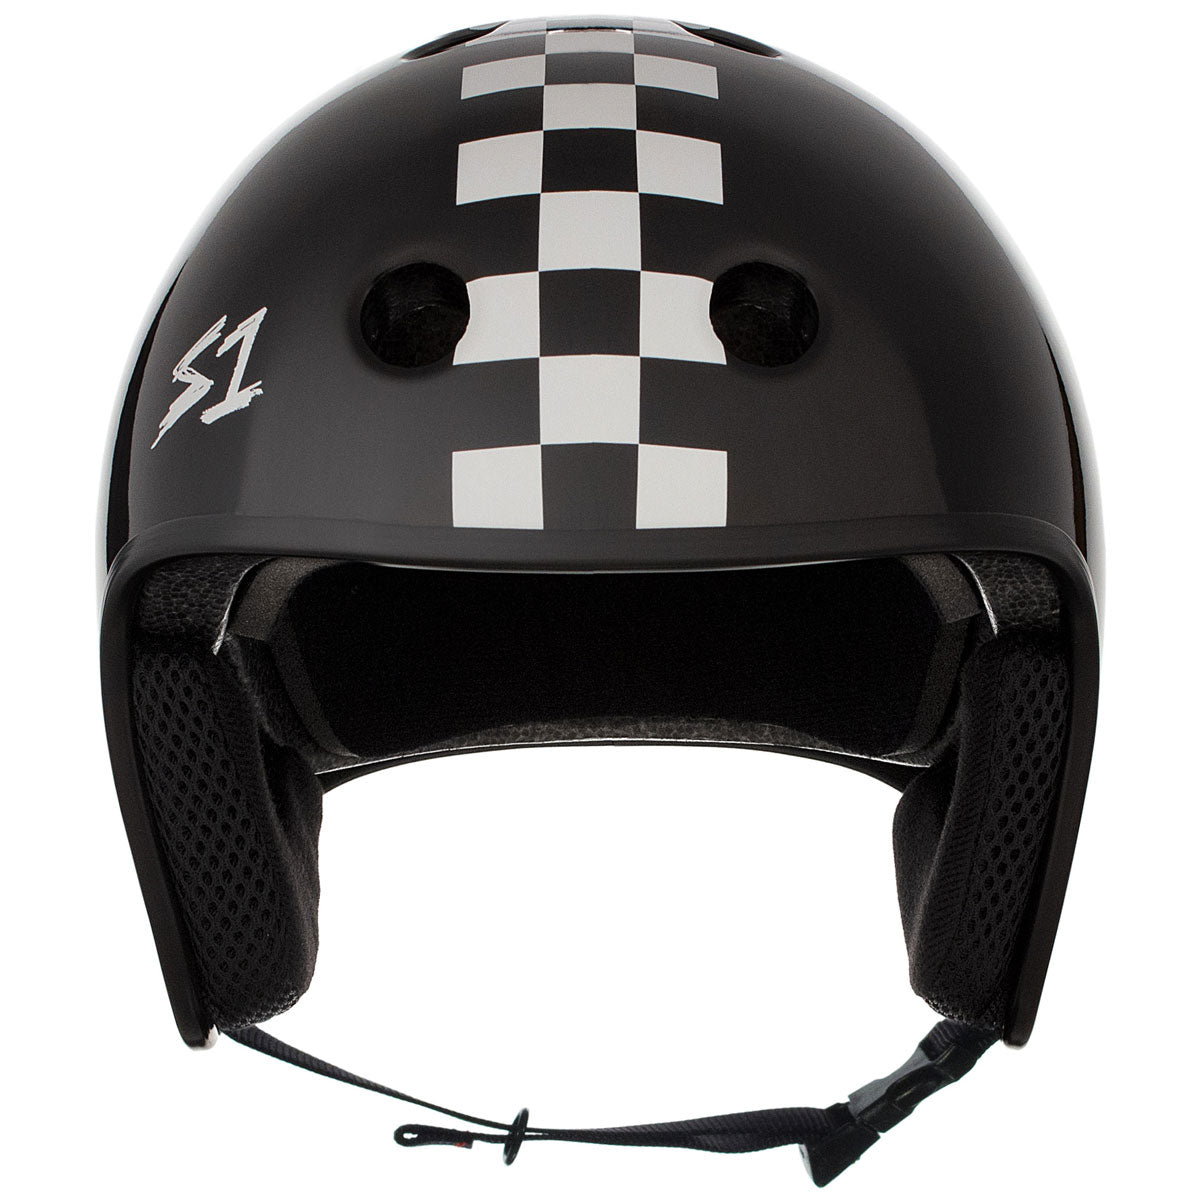 S-One Lifer Retro Helmet - Black Matte Checkers image 3